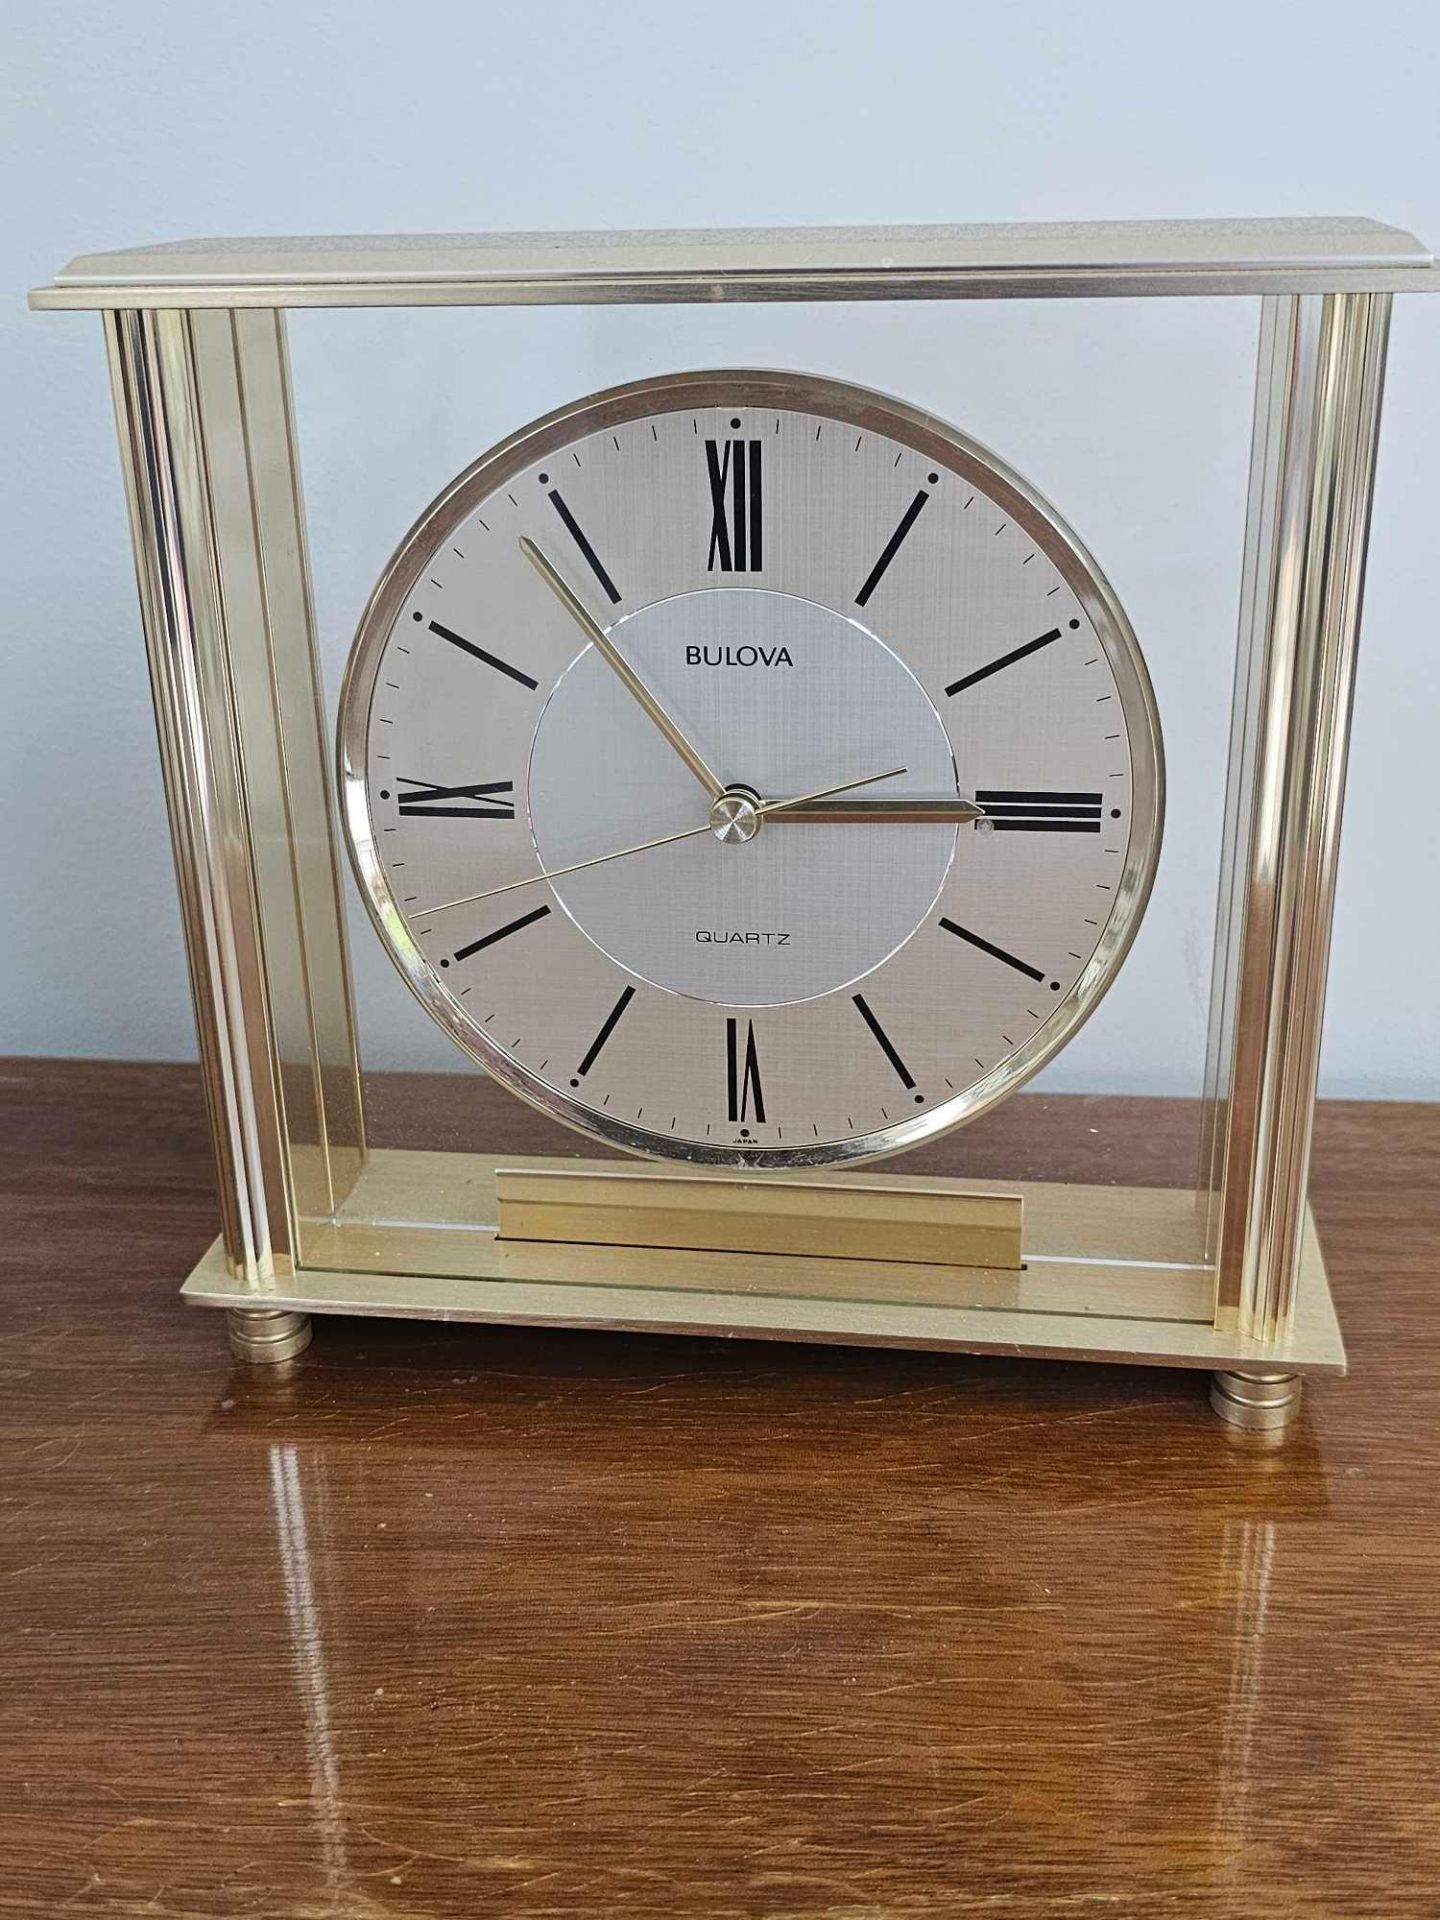 Bulova Grand Prix Executive Analog Quartz Brass Desk Clock B1700 T9 KW280 - Image 2 of 2